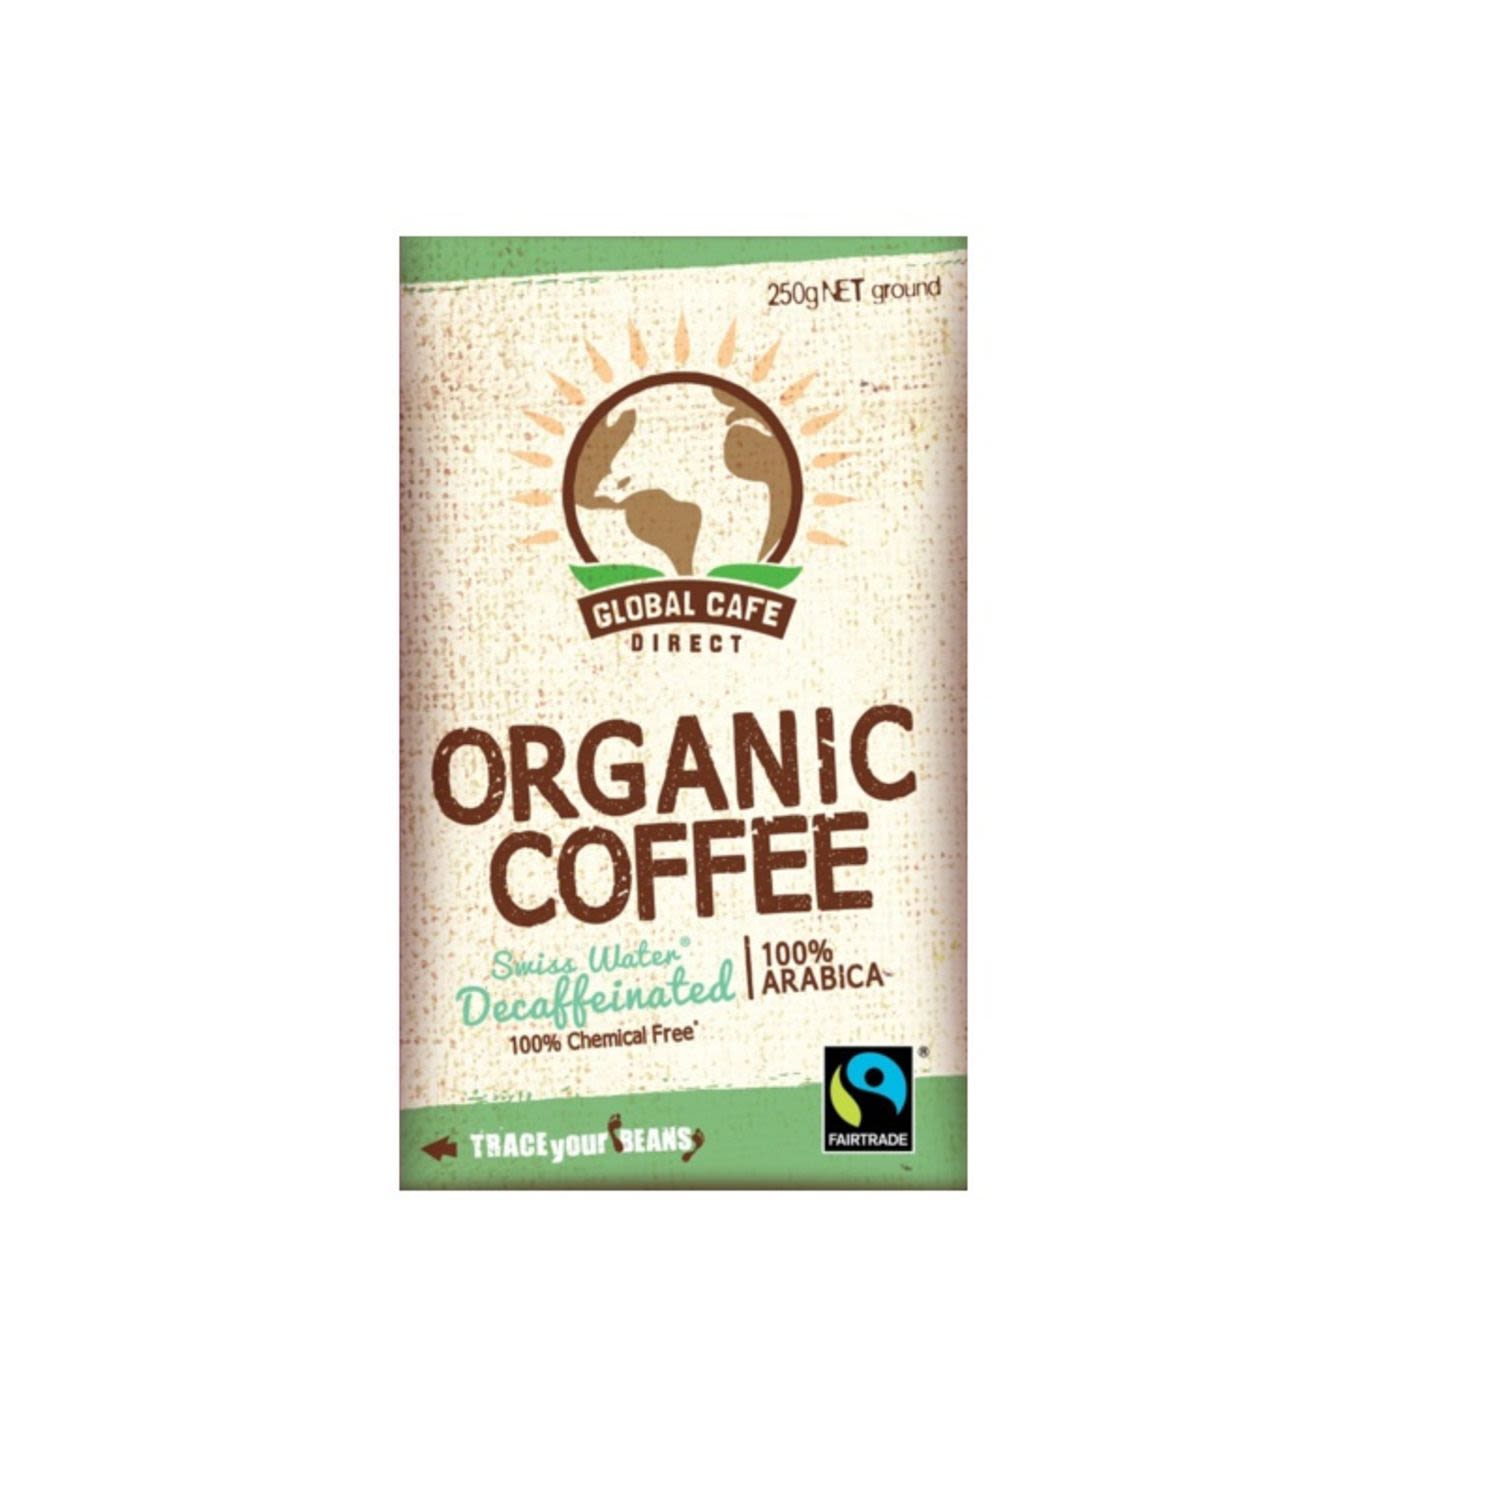 Global Cafe Decaffeinated Organic Coffee, 250 Gram